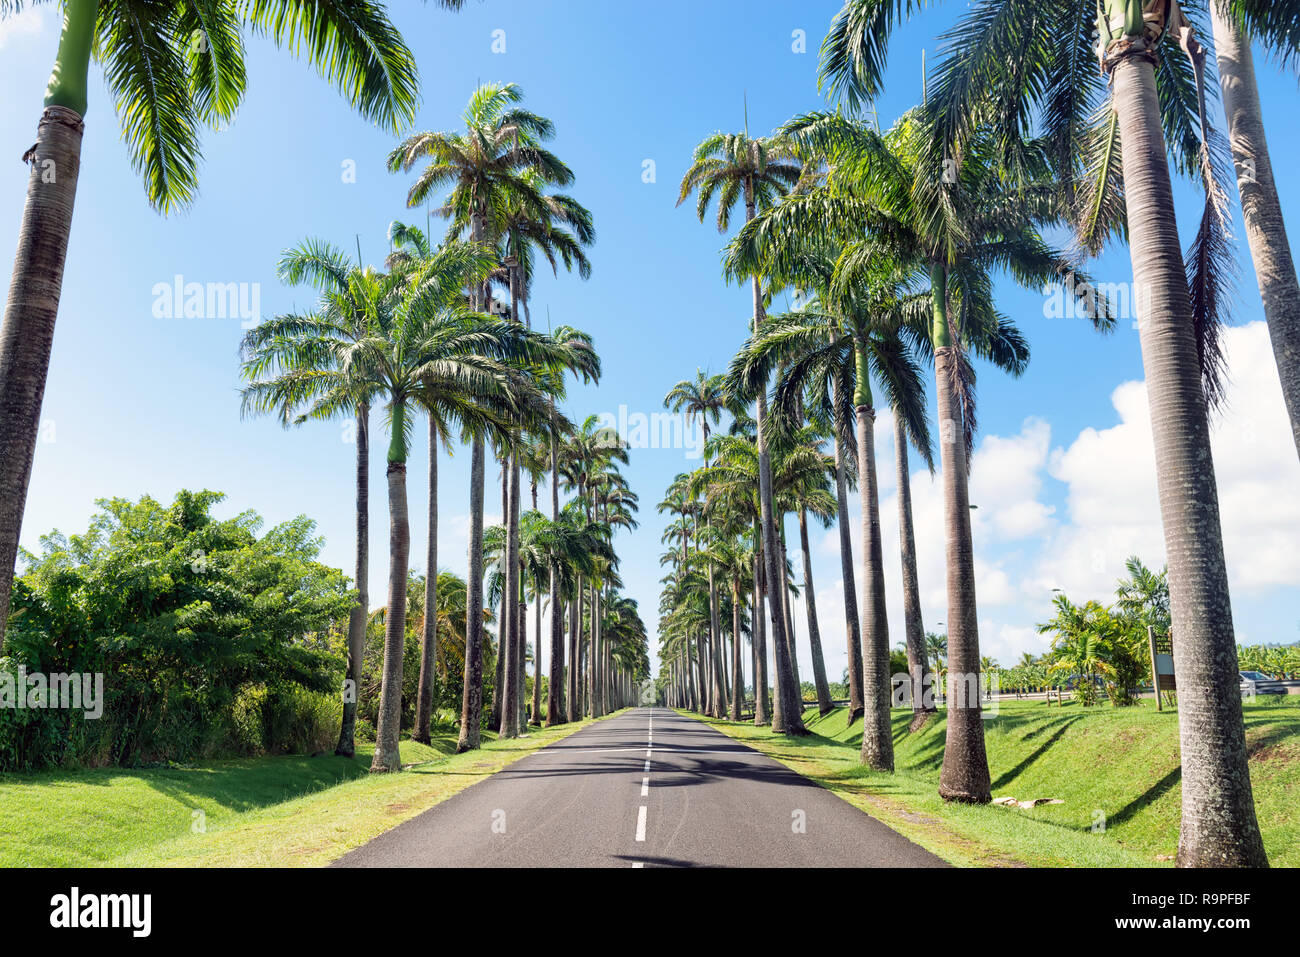 Capesterre Belle eau, Guadeloupe, Französisch Westindien, berühmten Royal Palm (roystonea Regia) gesäumten Straße namens Dumanoir Gasse. Stockfoto